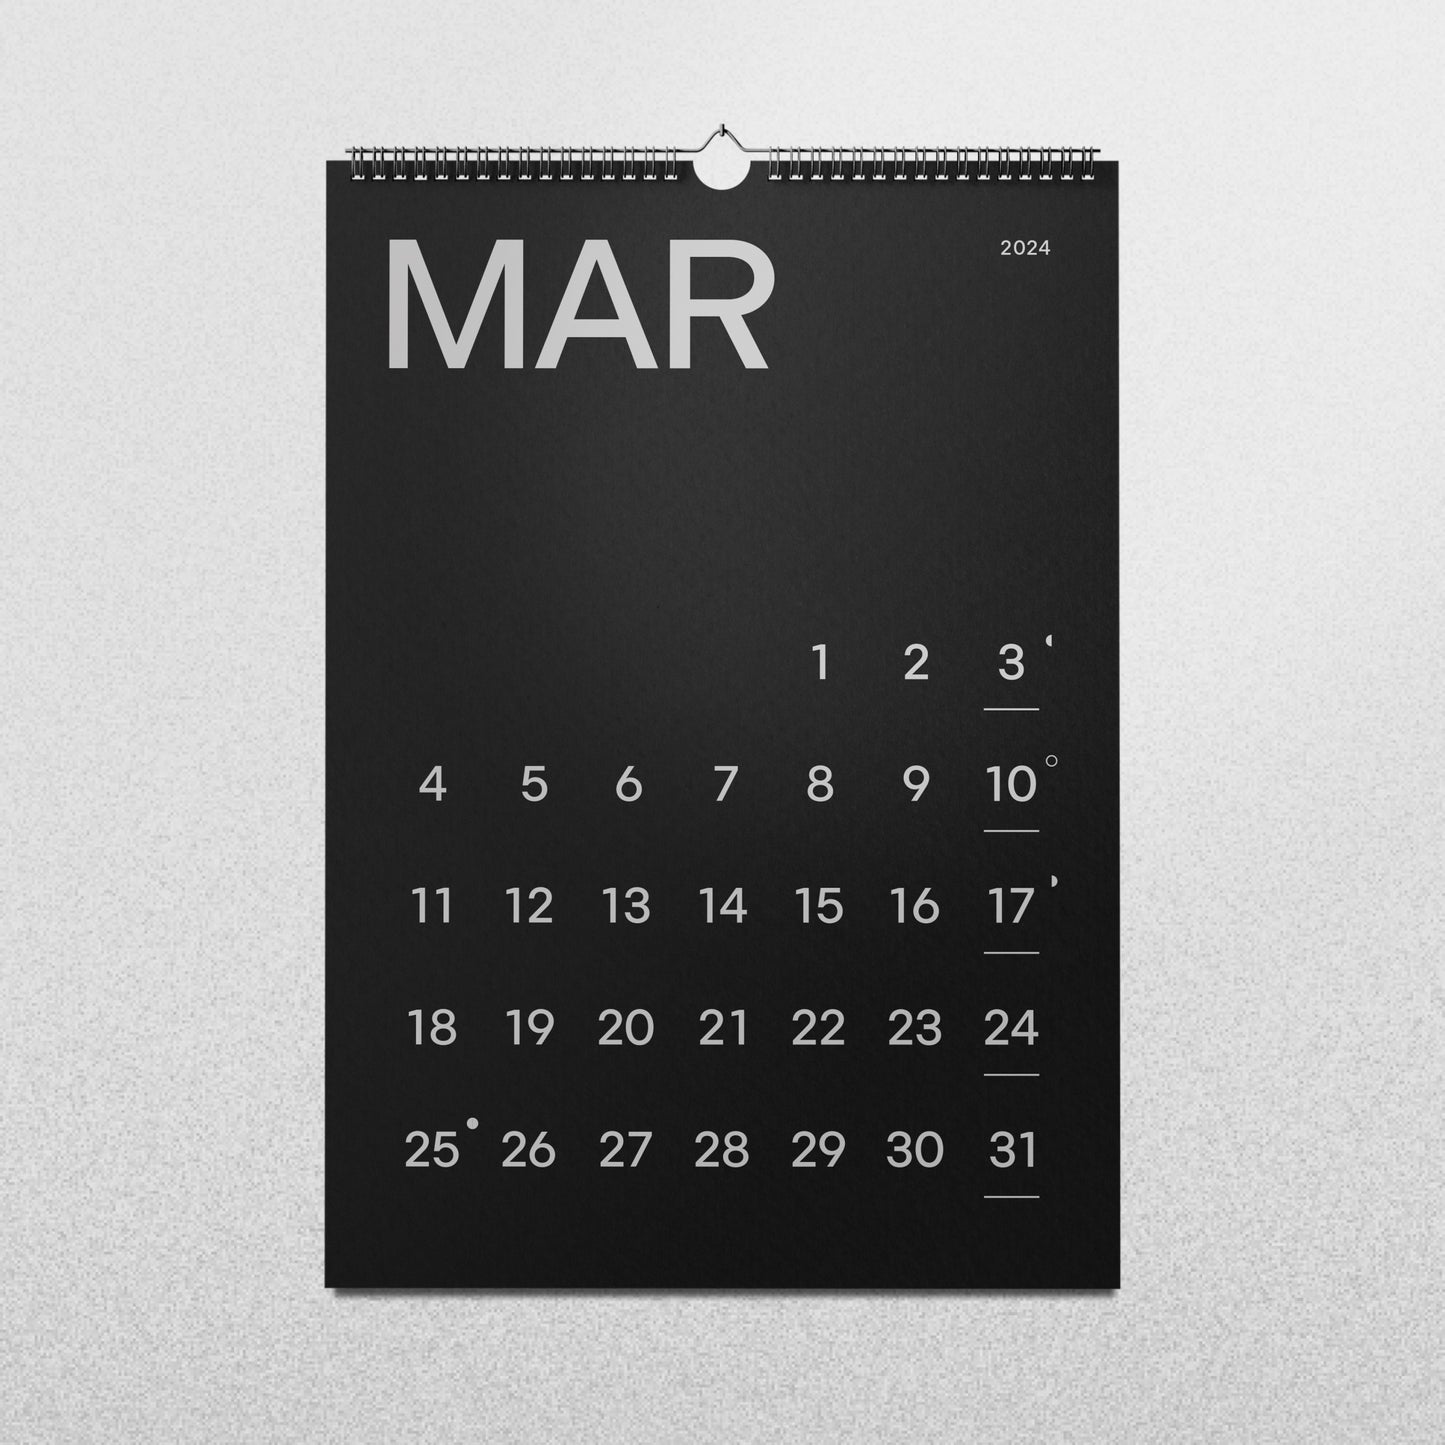 BRD'24 Calendar